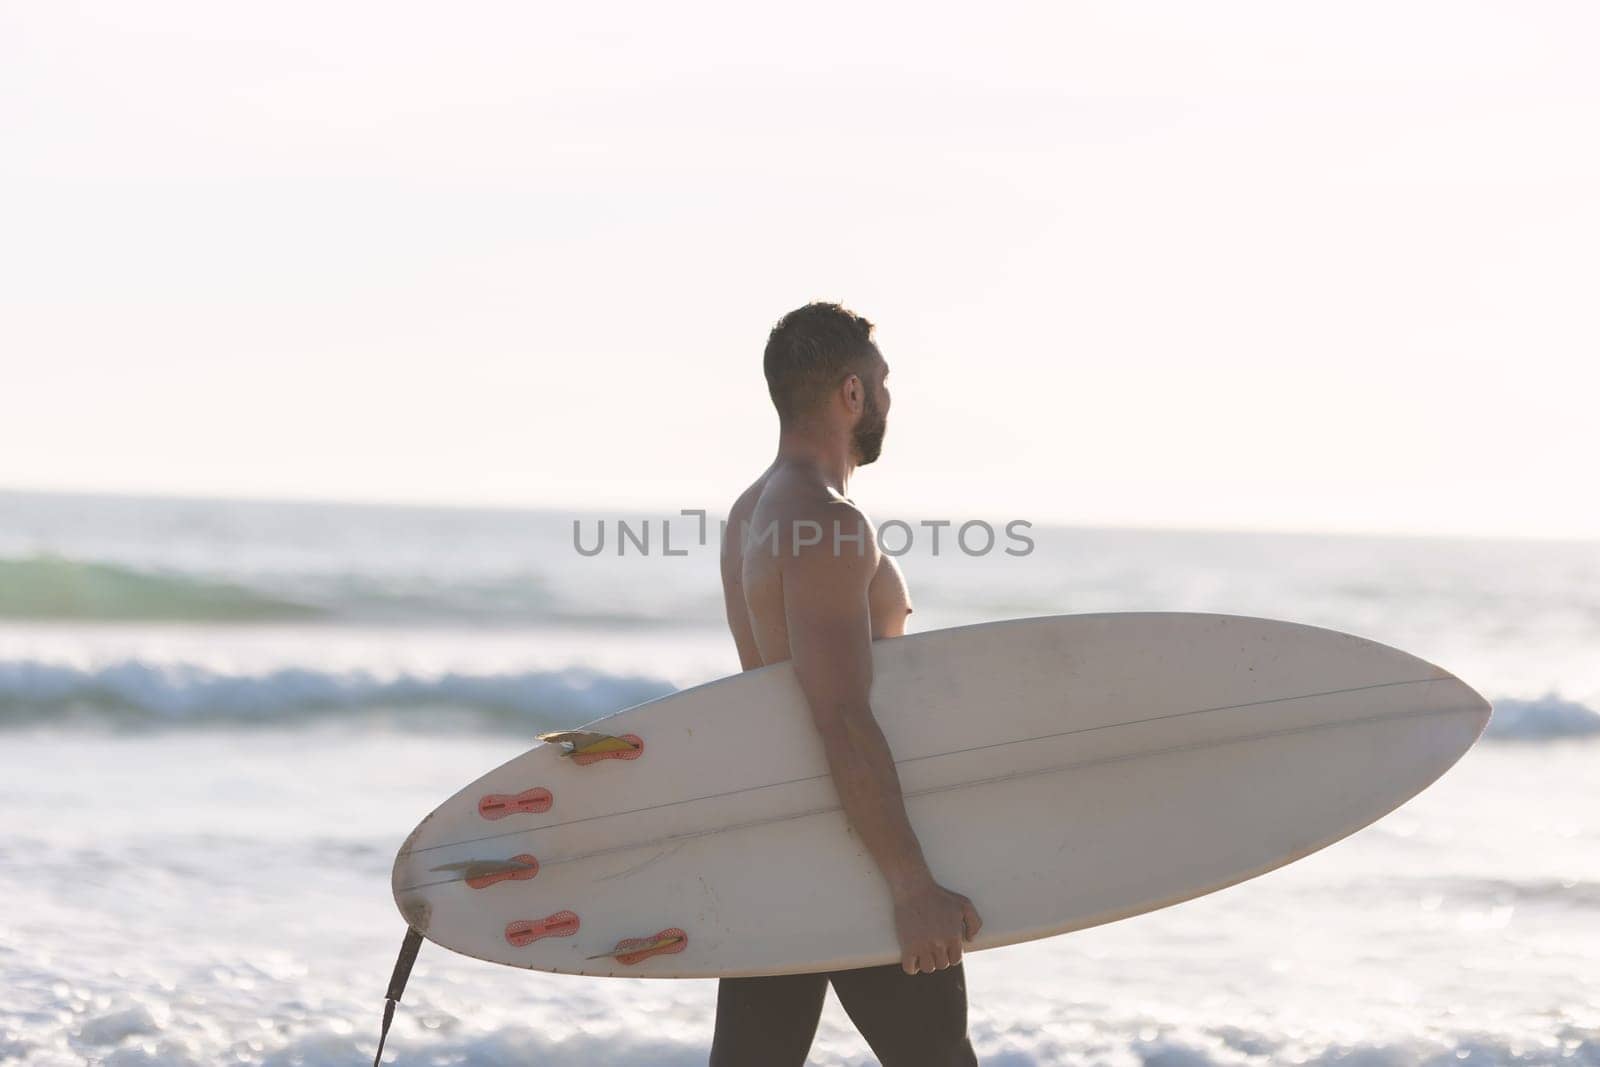 A man surfer with naked torso walking on the seashore. Mid shot